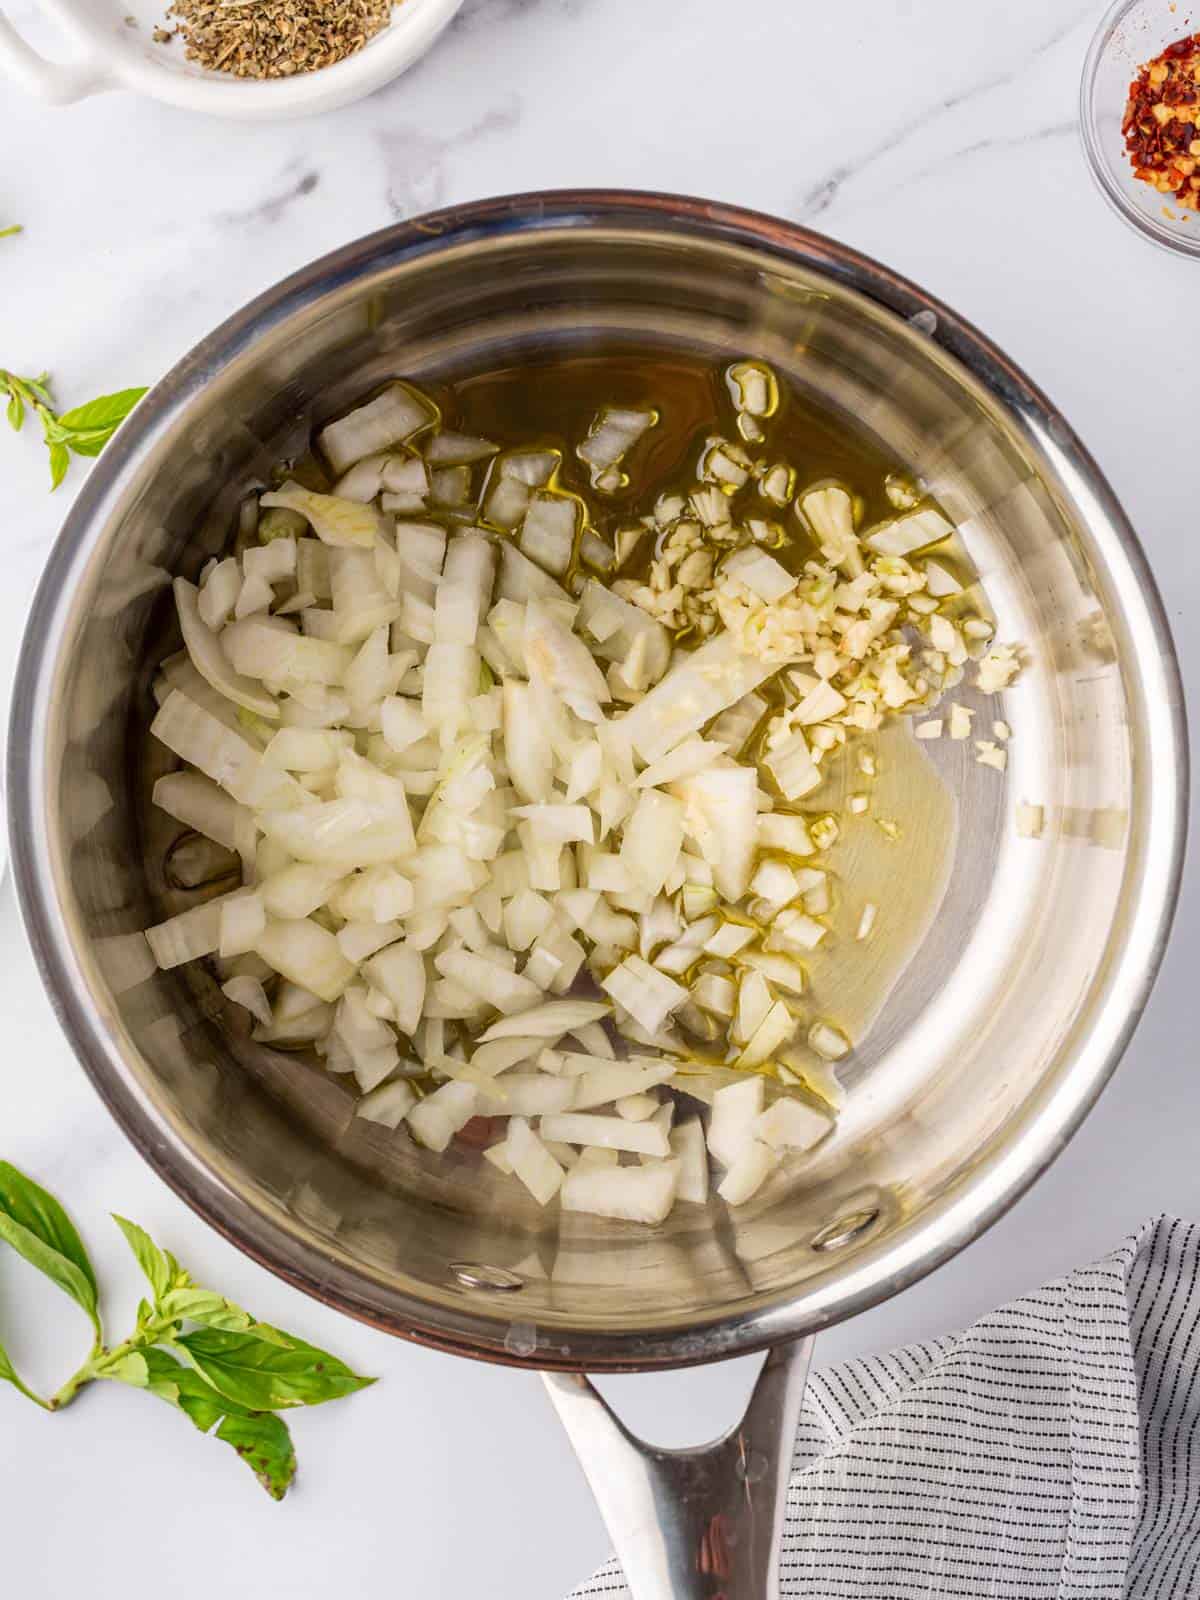 onion in the pot to make marinara sauce